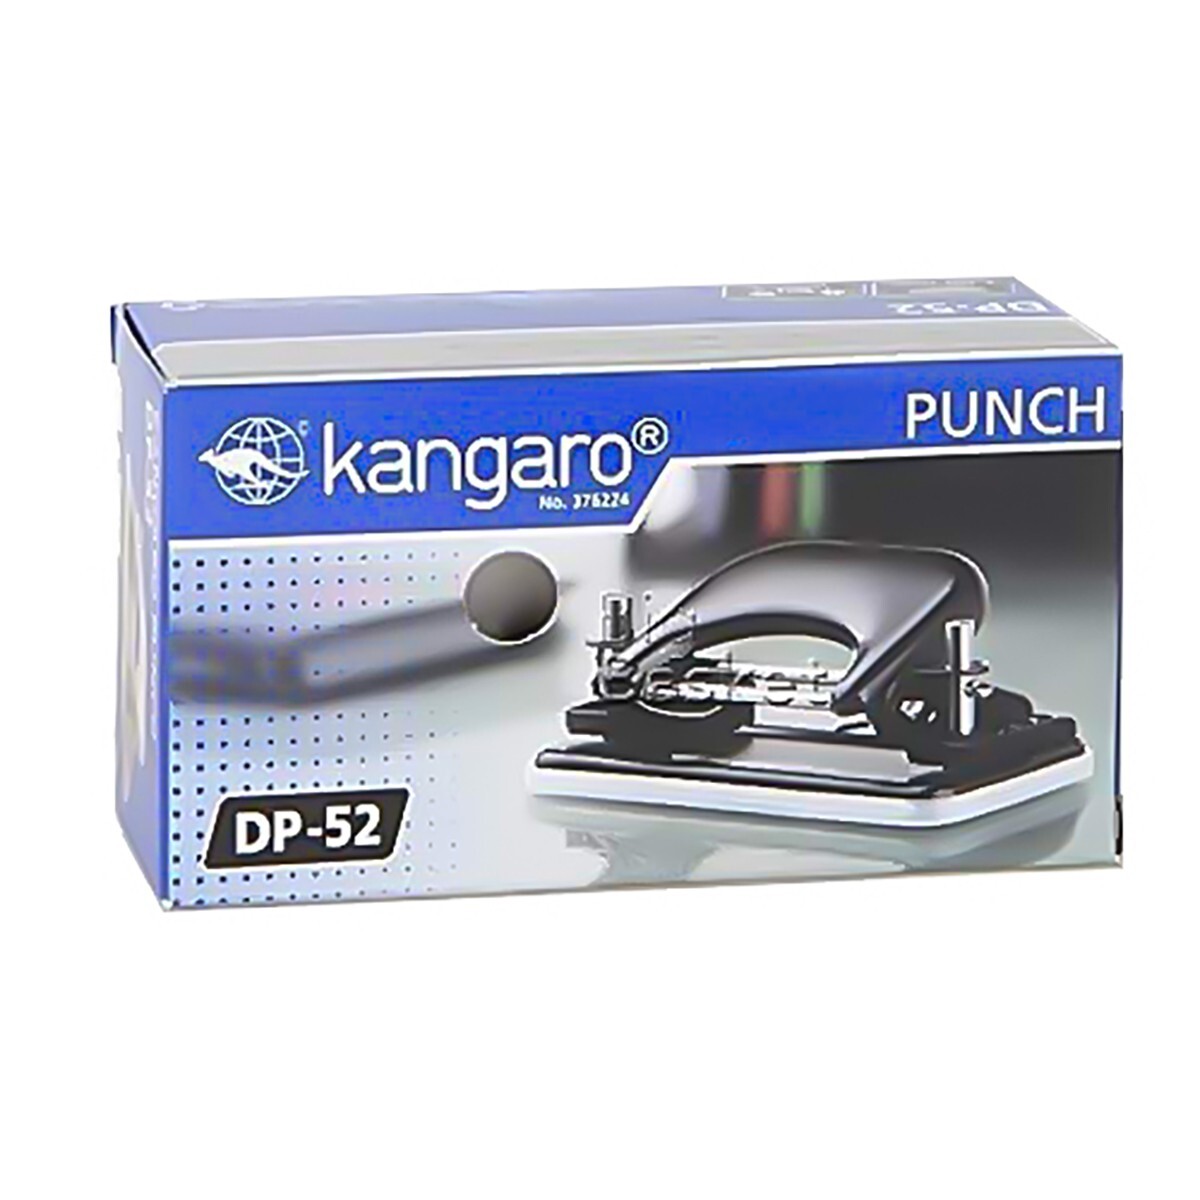 Kangaro Paper Punch DP-52 Assorted Colour